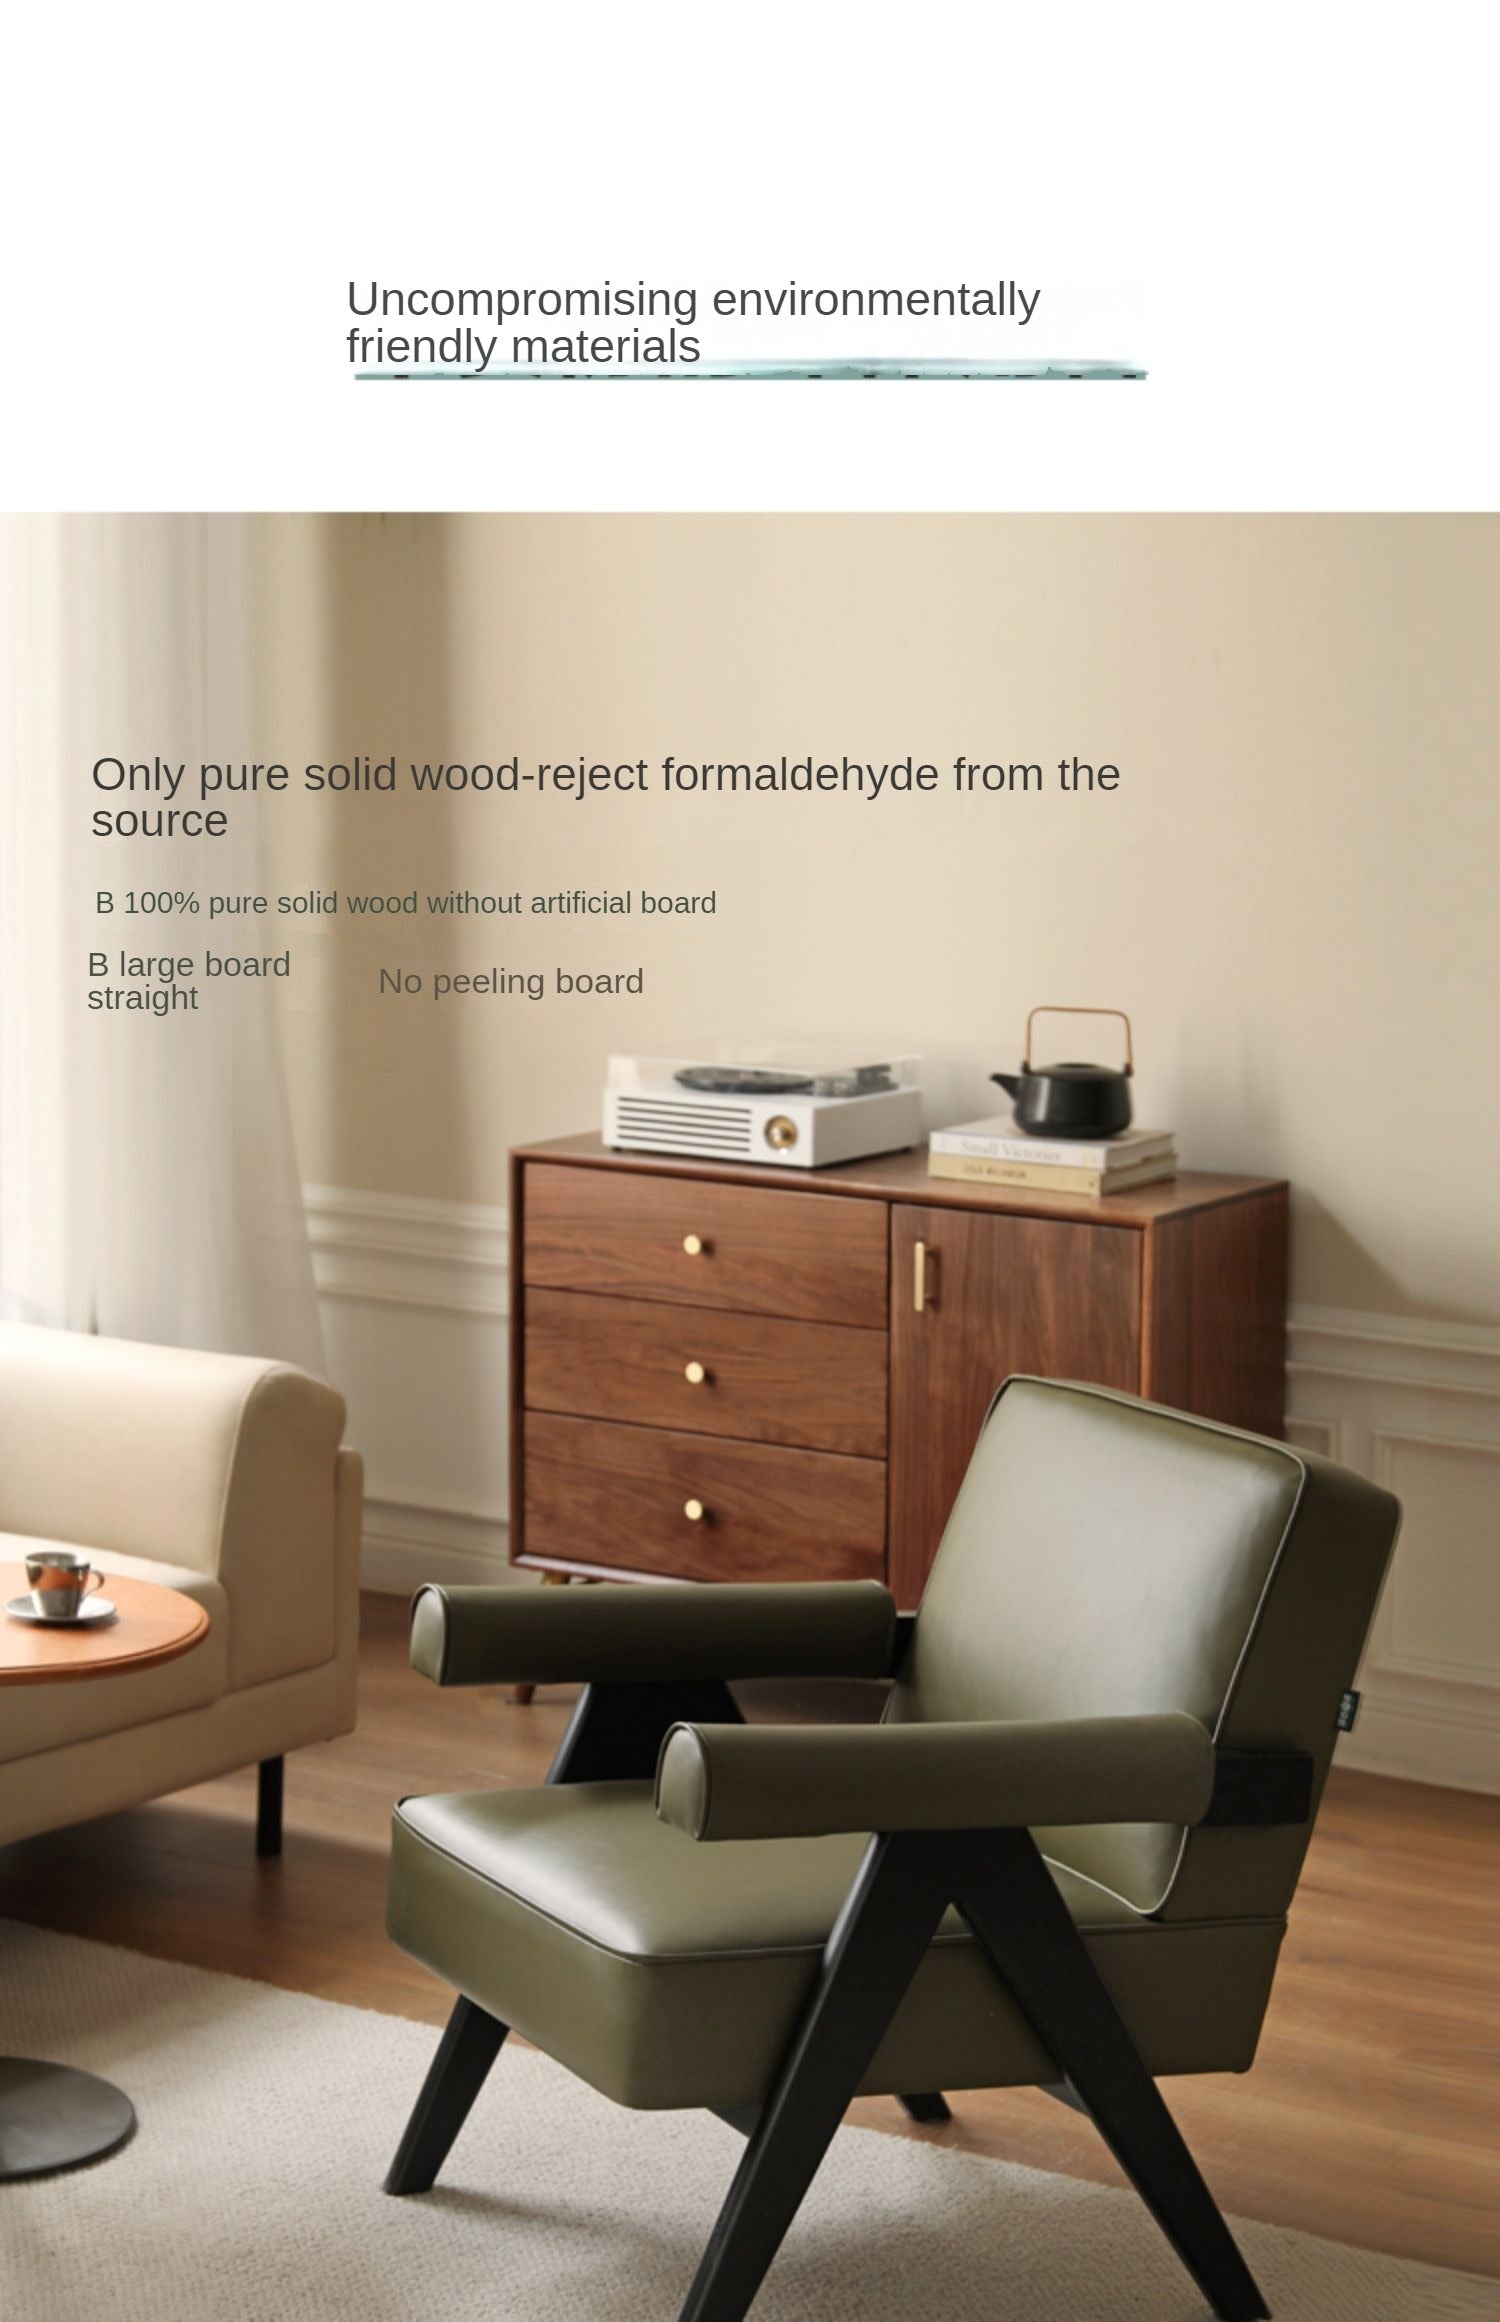 Retro Oak Solid Wood leather armchair)